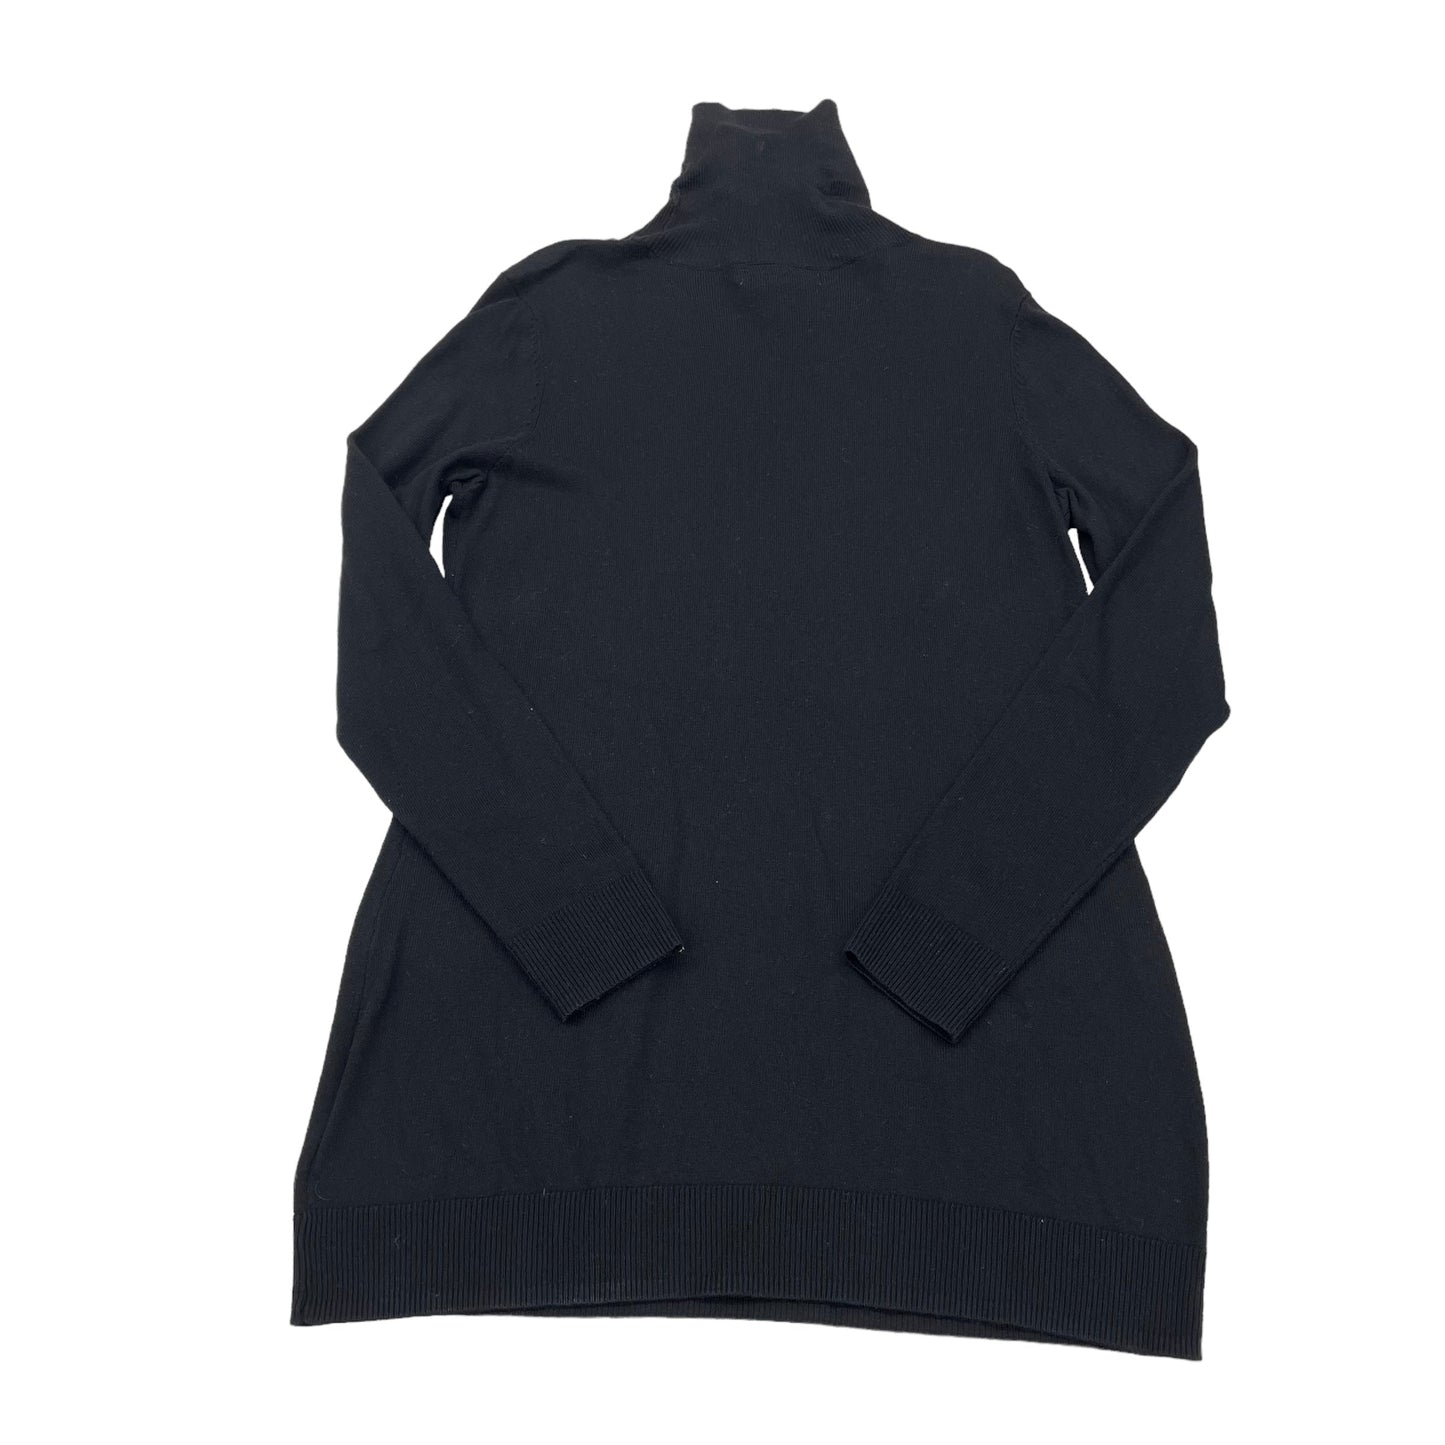 Sweater Designer By Michael Kors  Size: M